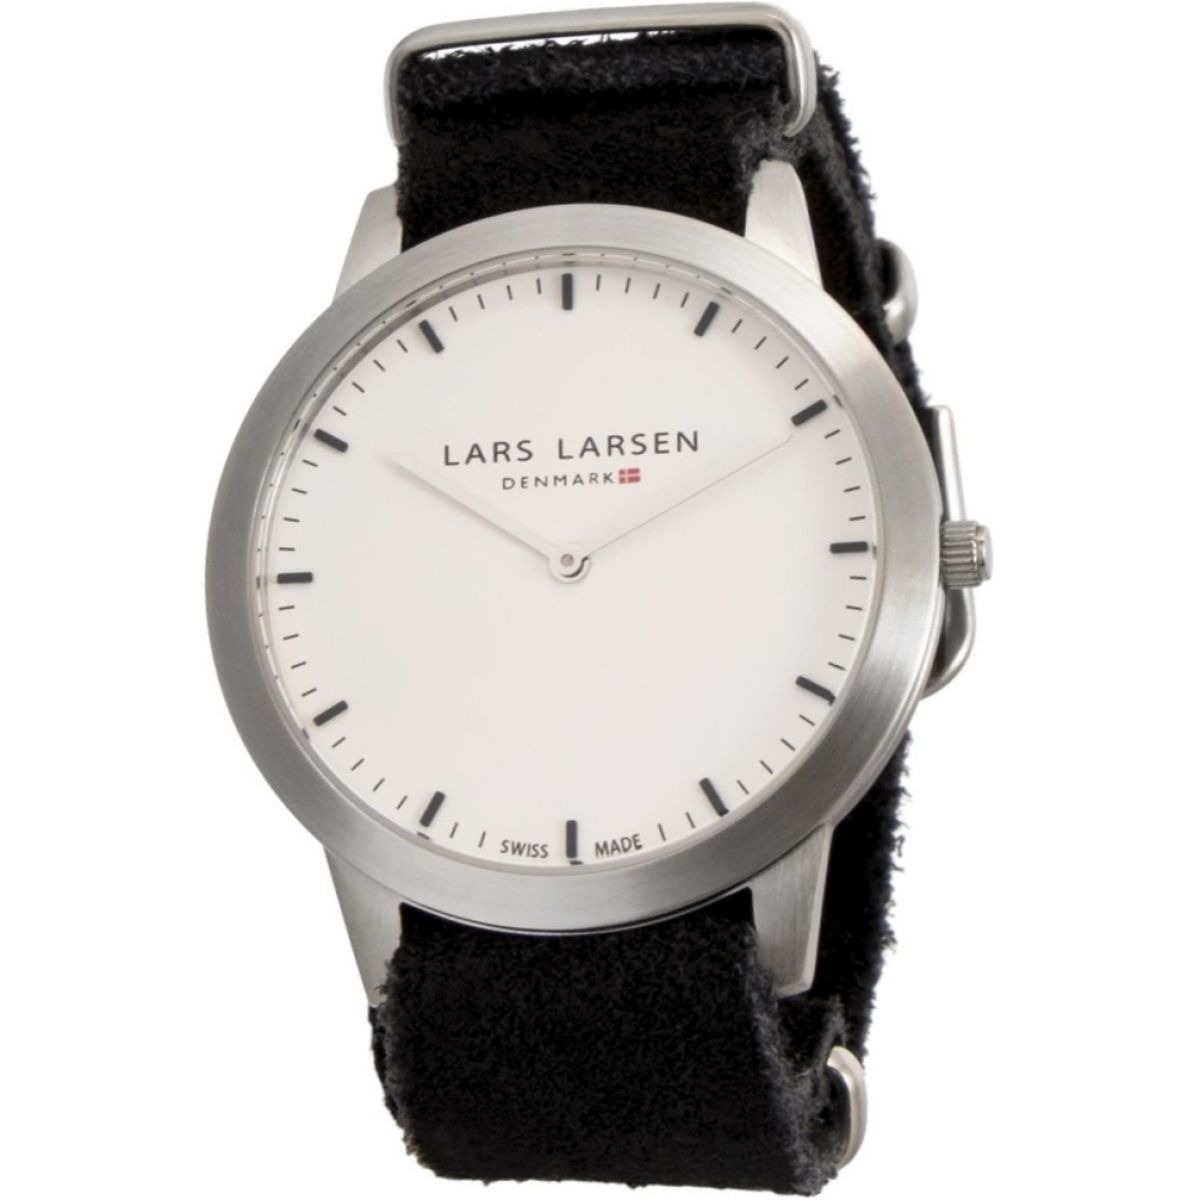 Lars Larsen White Watch Watch Shop Gents GOOFASH